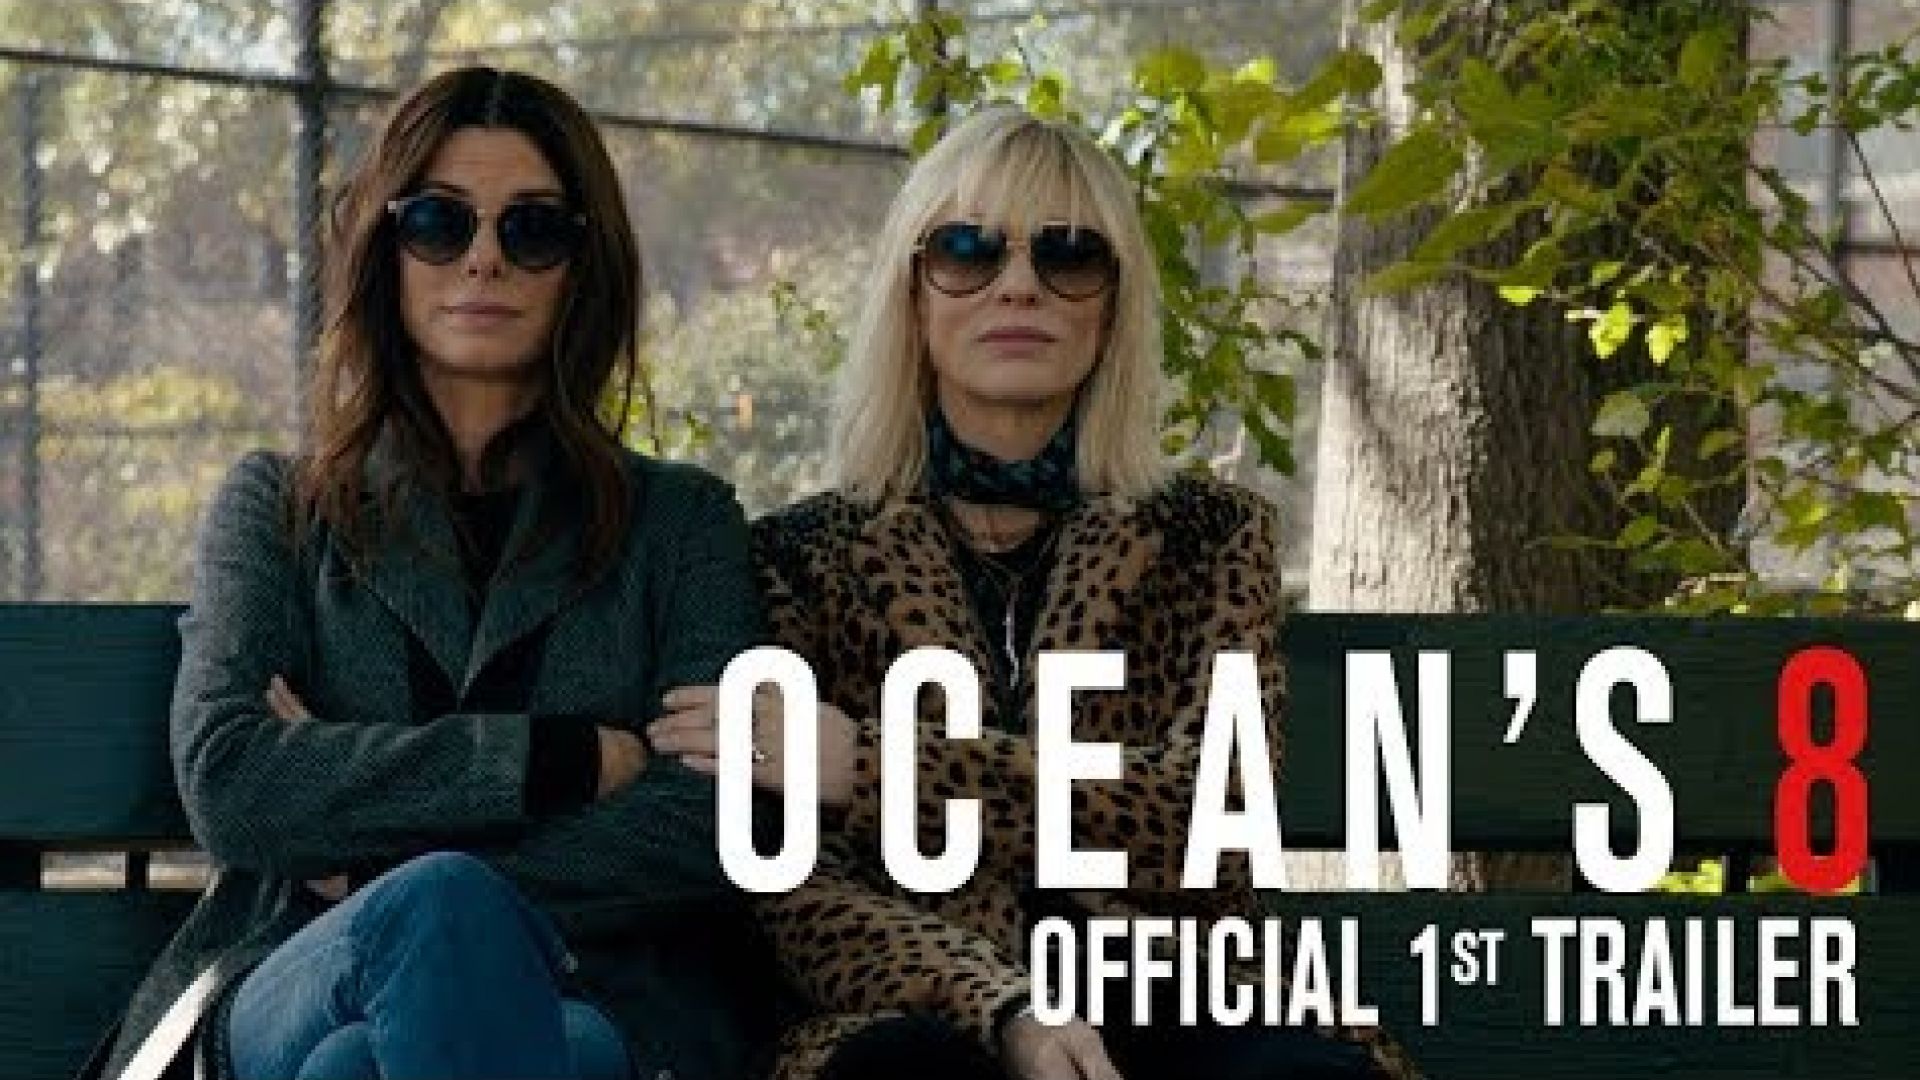 Sandra Bullock Assembles Her Crew In The First Trailer For Oceans 8 Cultjer